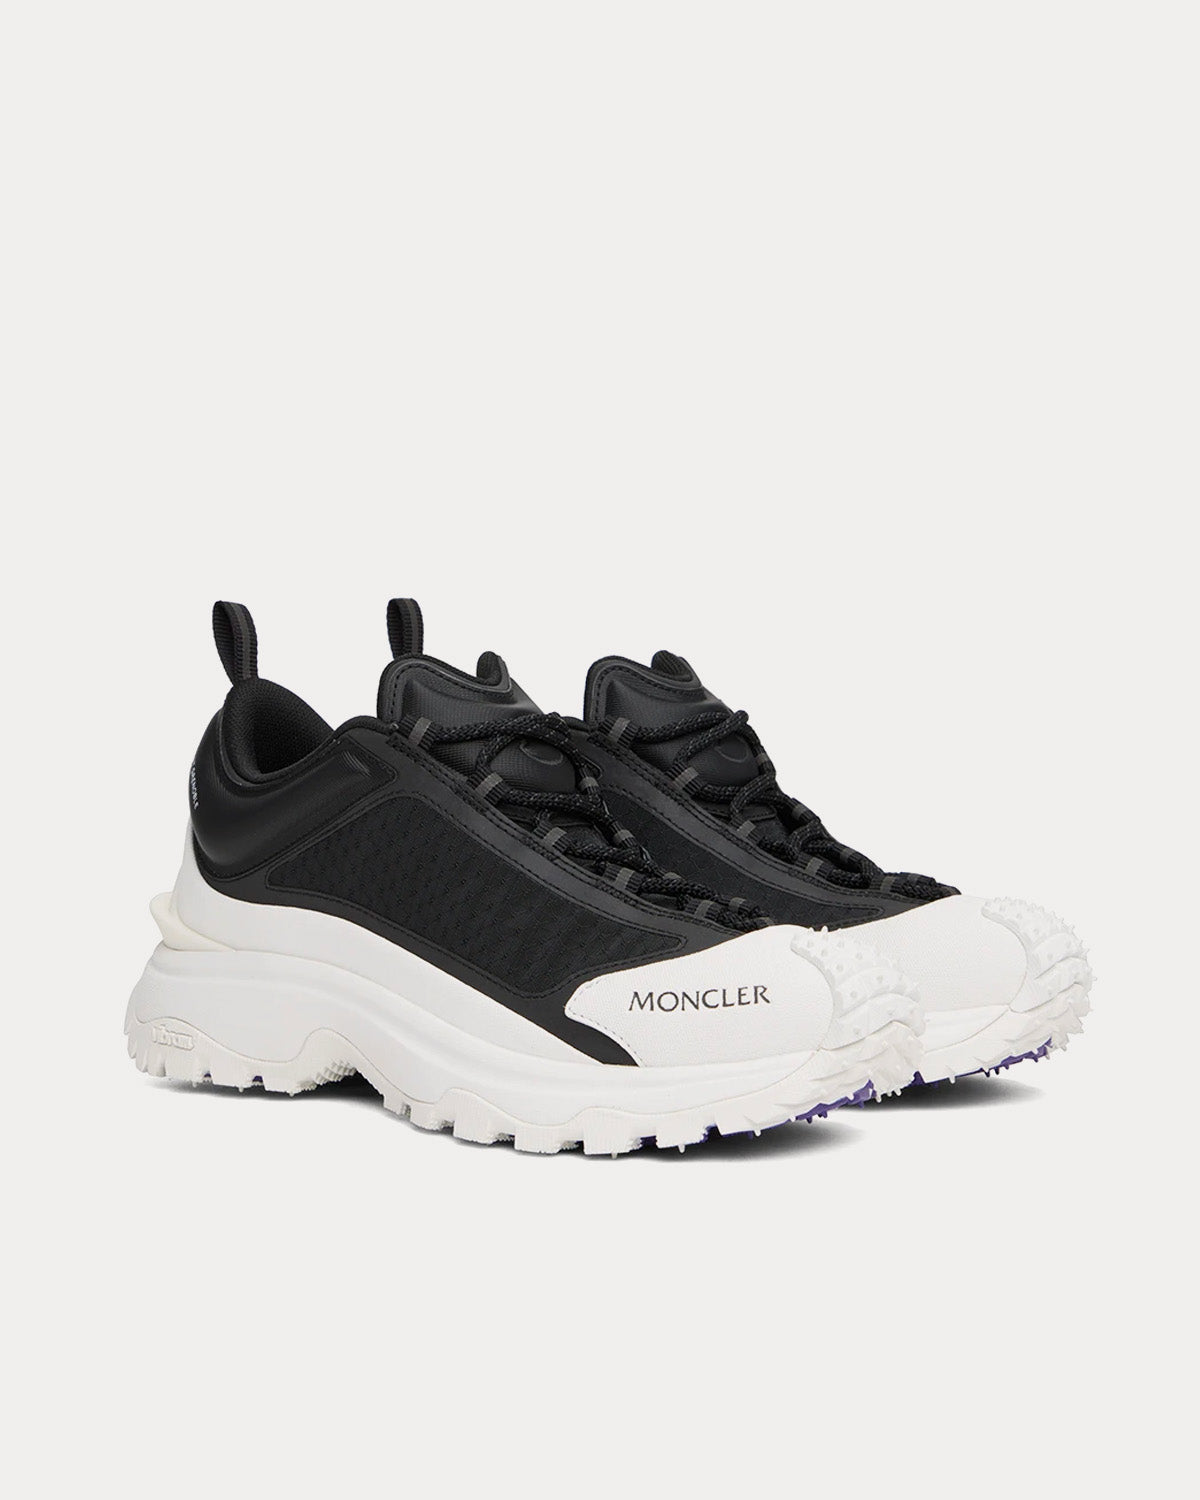 Moncler - Trailgrip Lite Black / White Low Top Sneakers